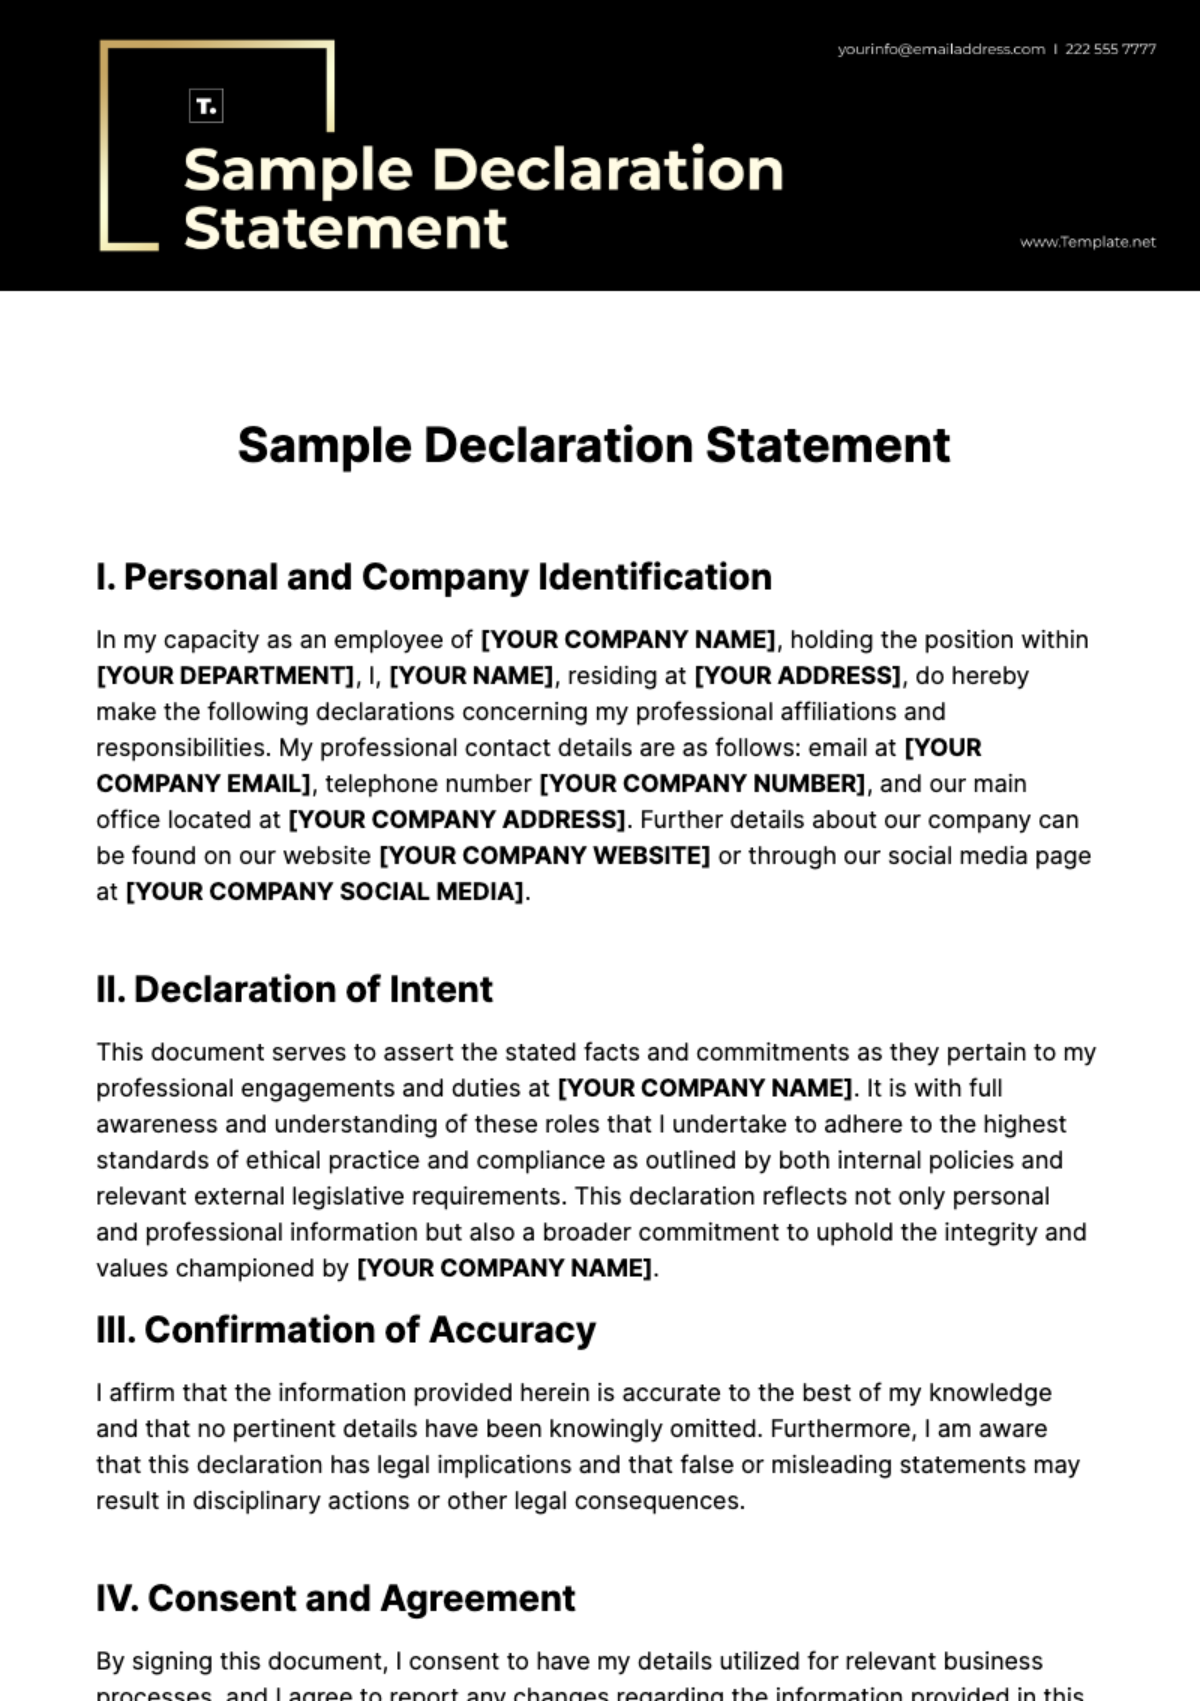 Sample Declaration Statement Template